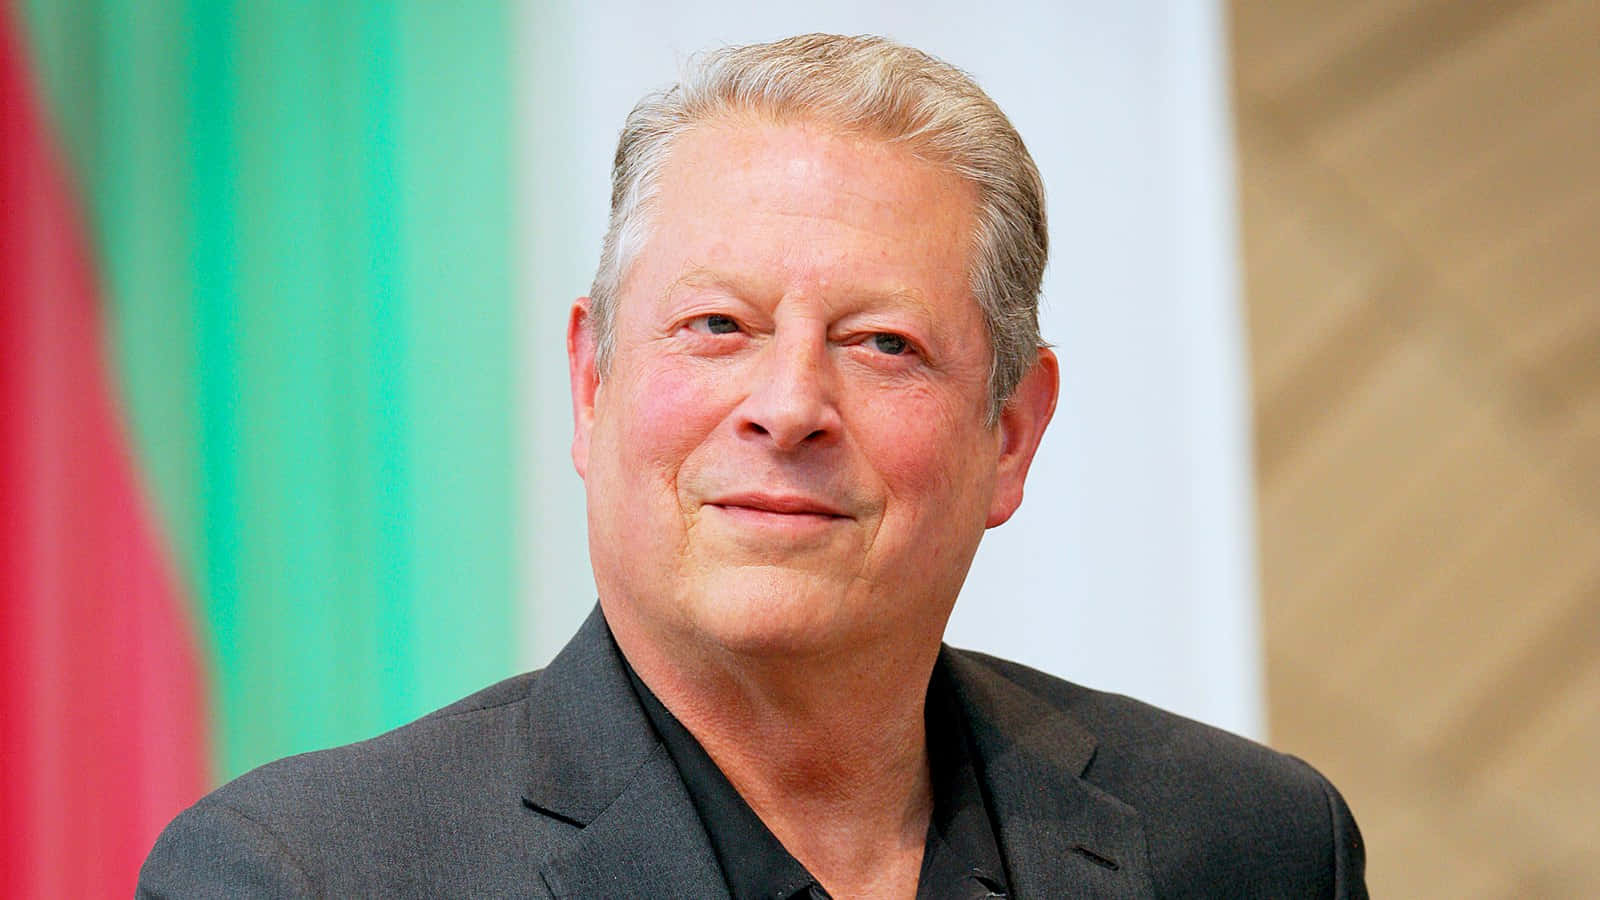 Al Gore Smiling Wallpaper